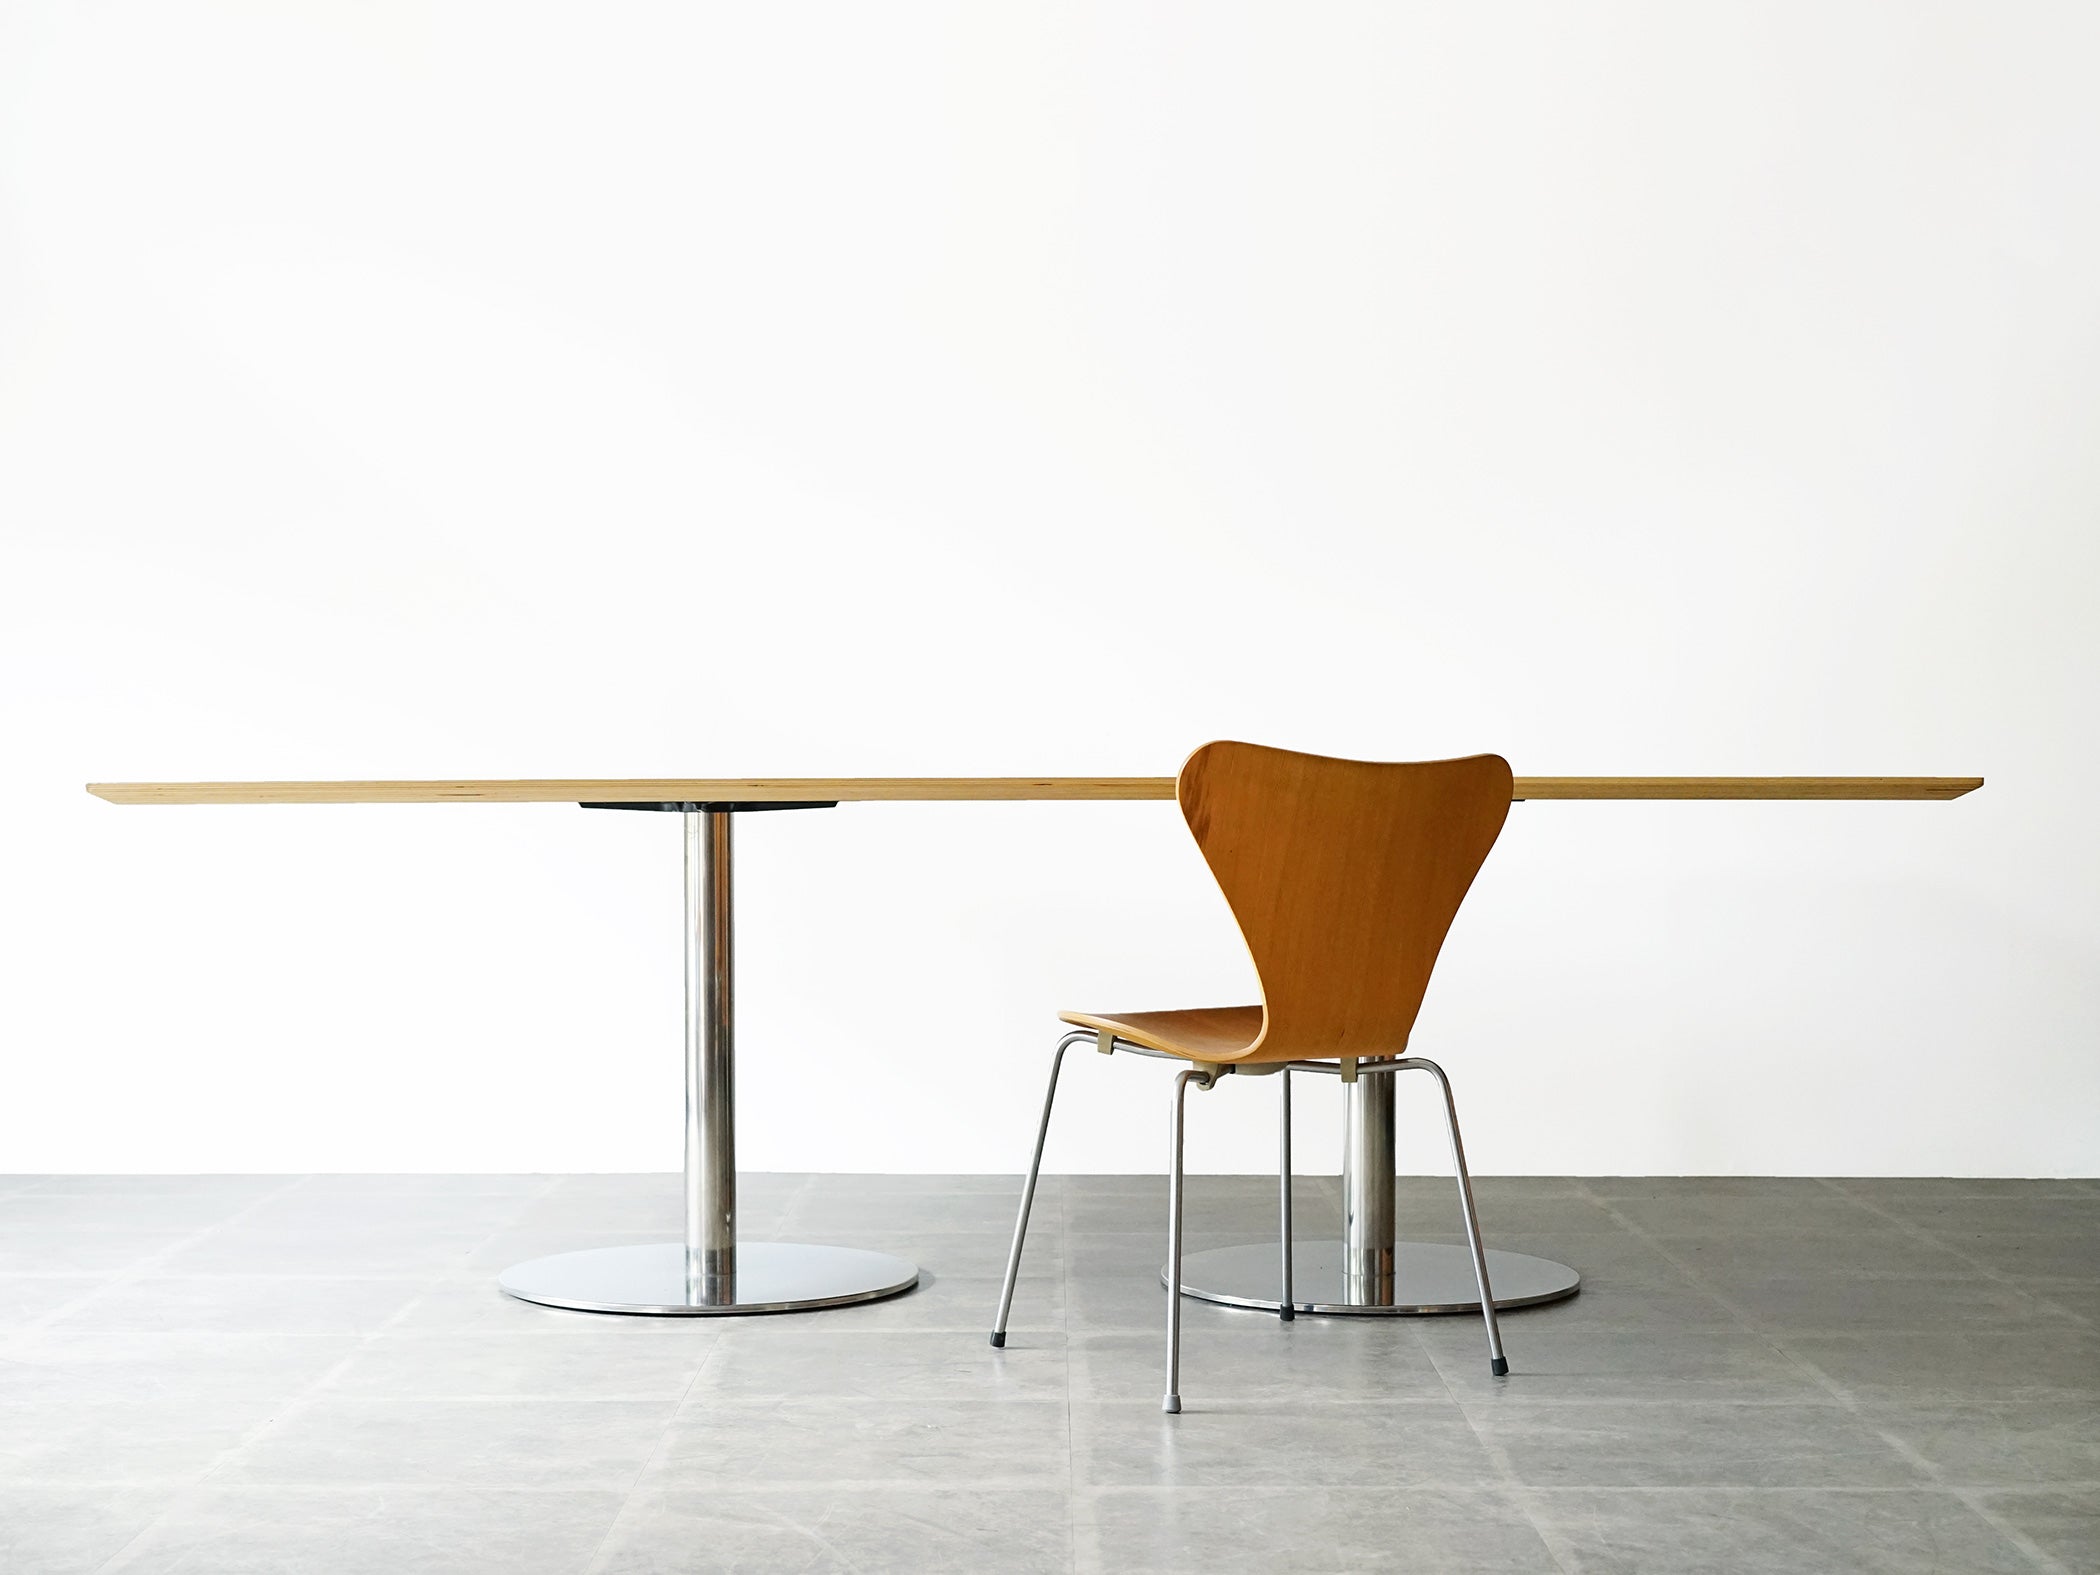 Danish furniture design Conference Table